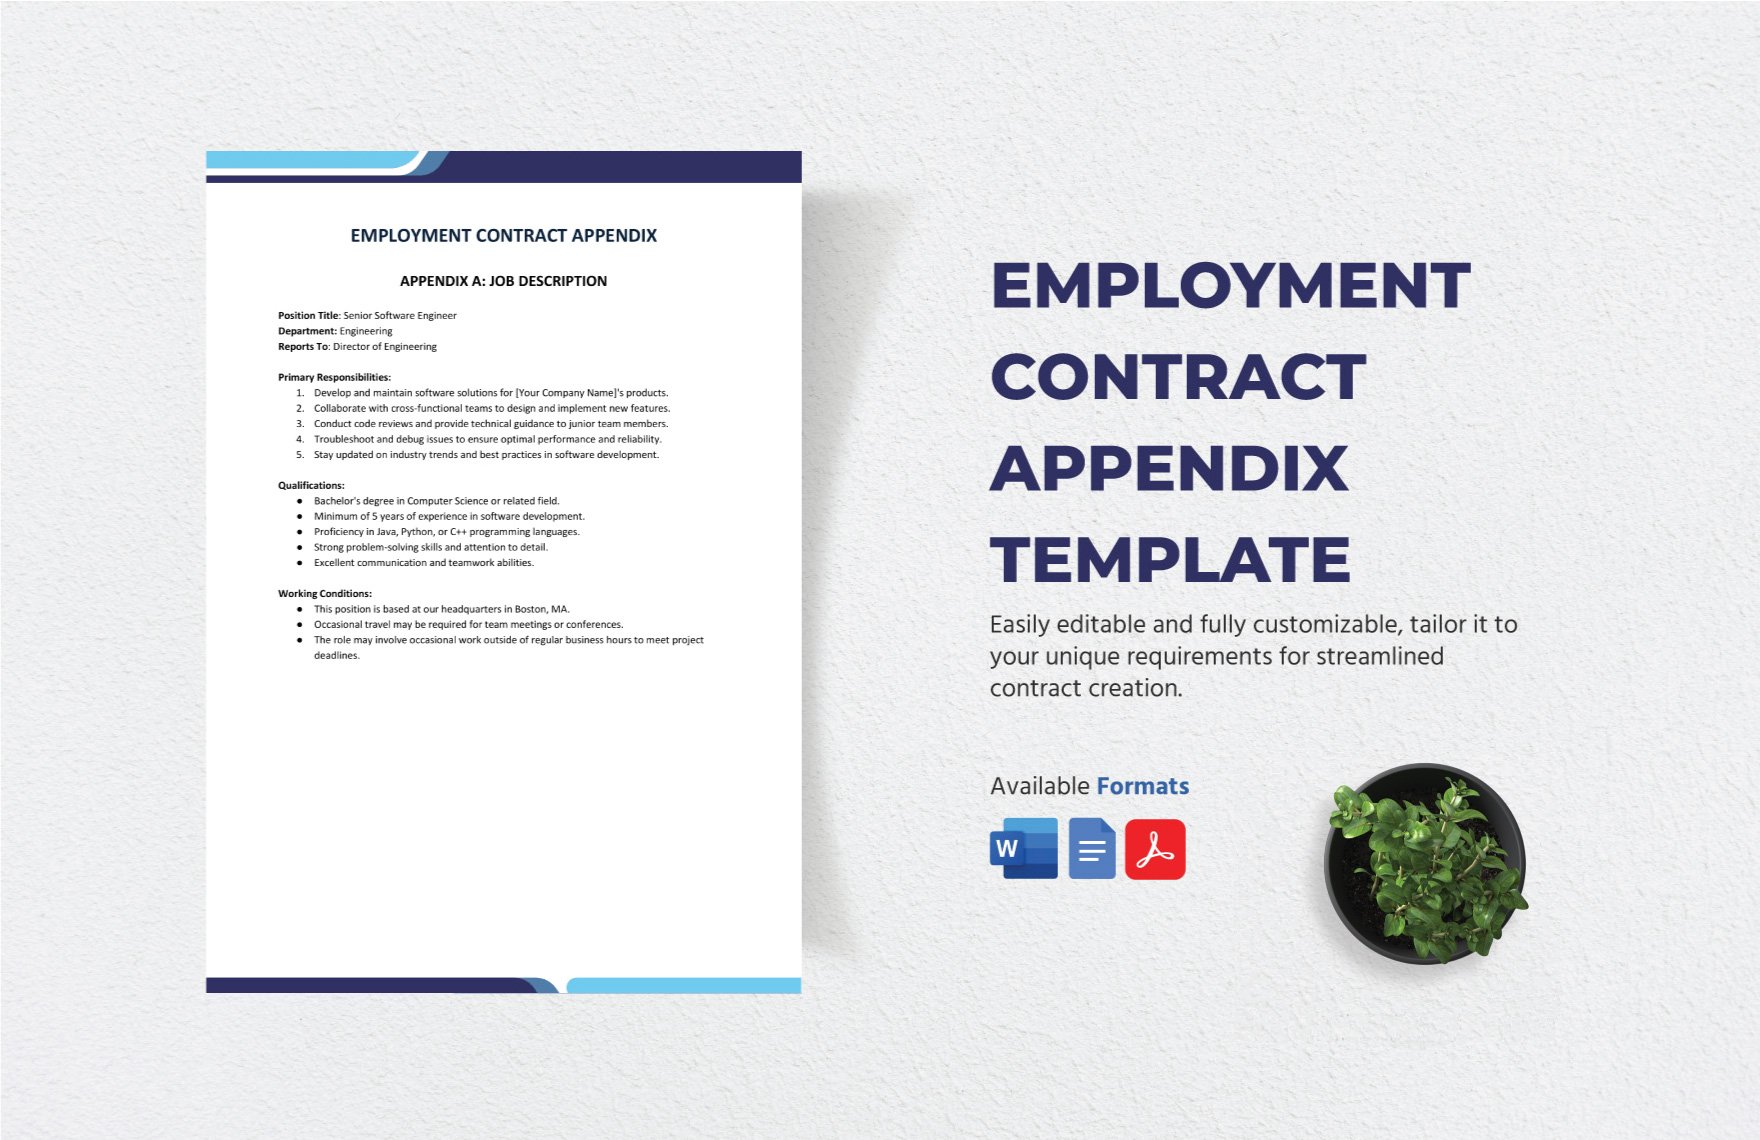 Employment Contract Appendix Template